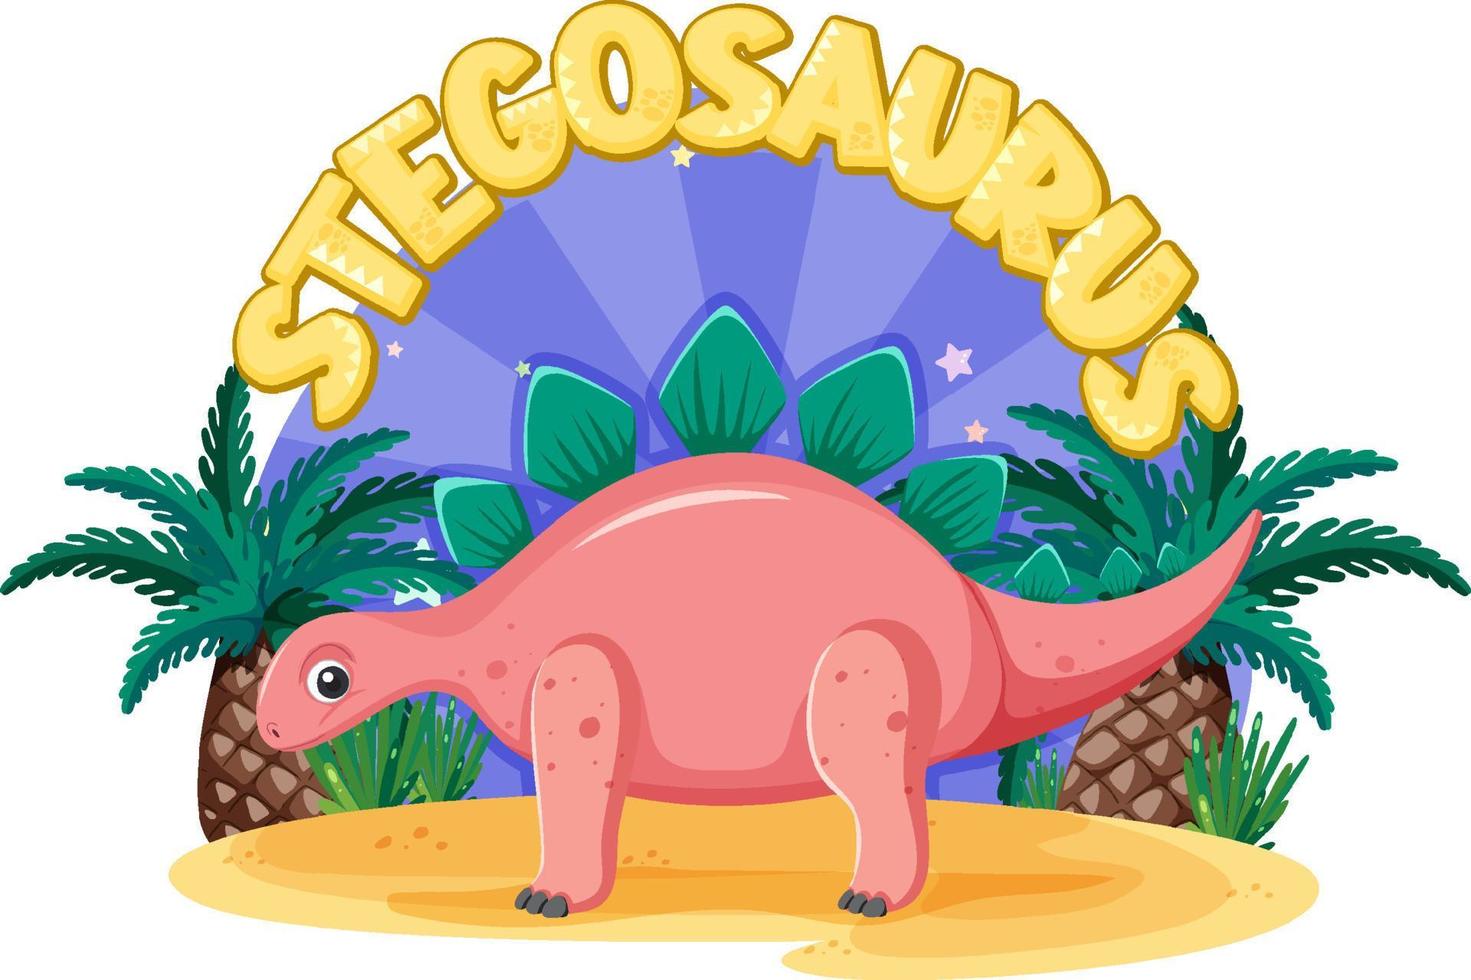 Little cute stegosaurus dinosaur cartoon character vector